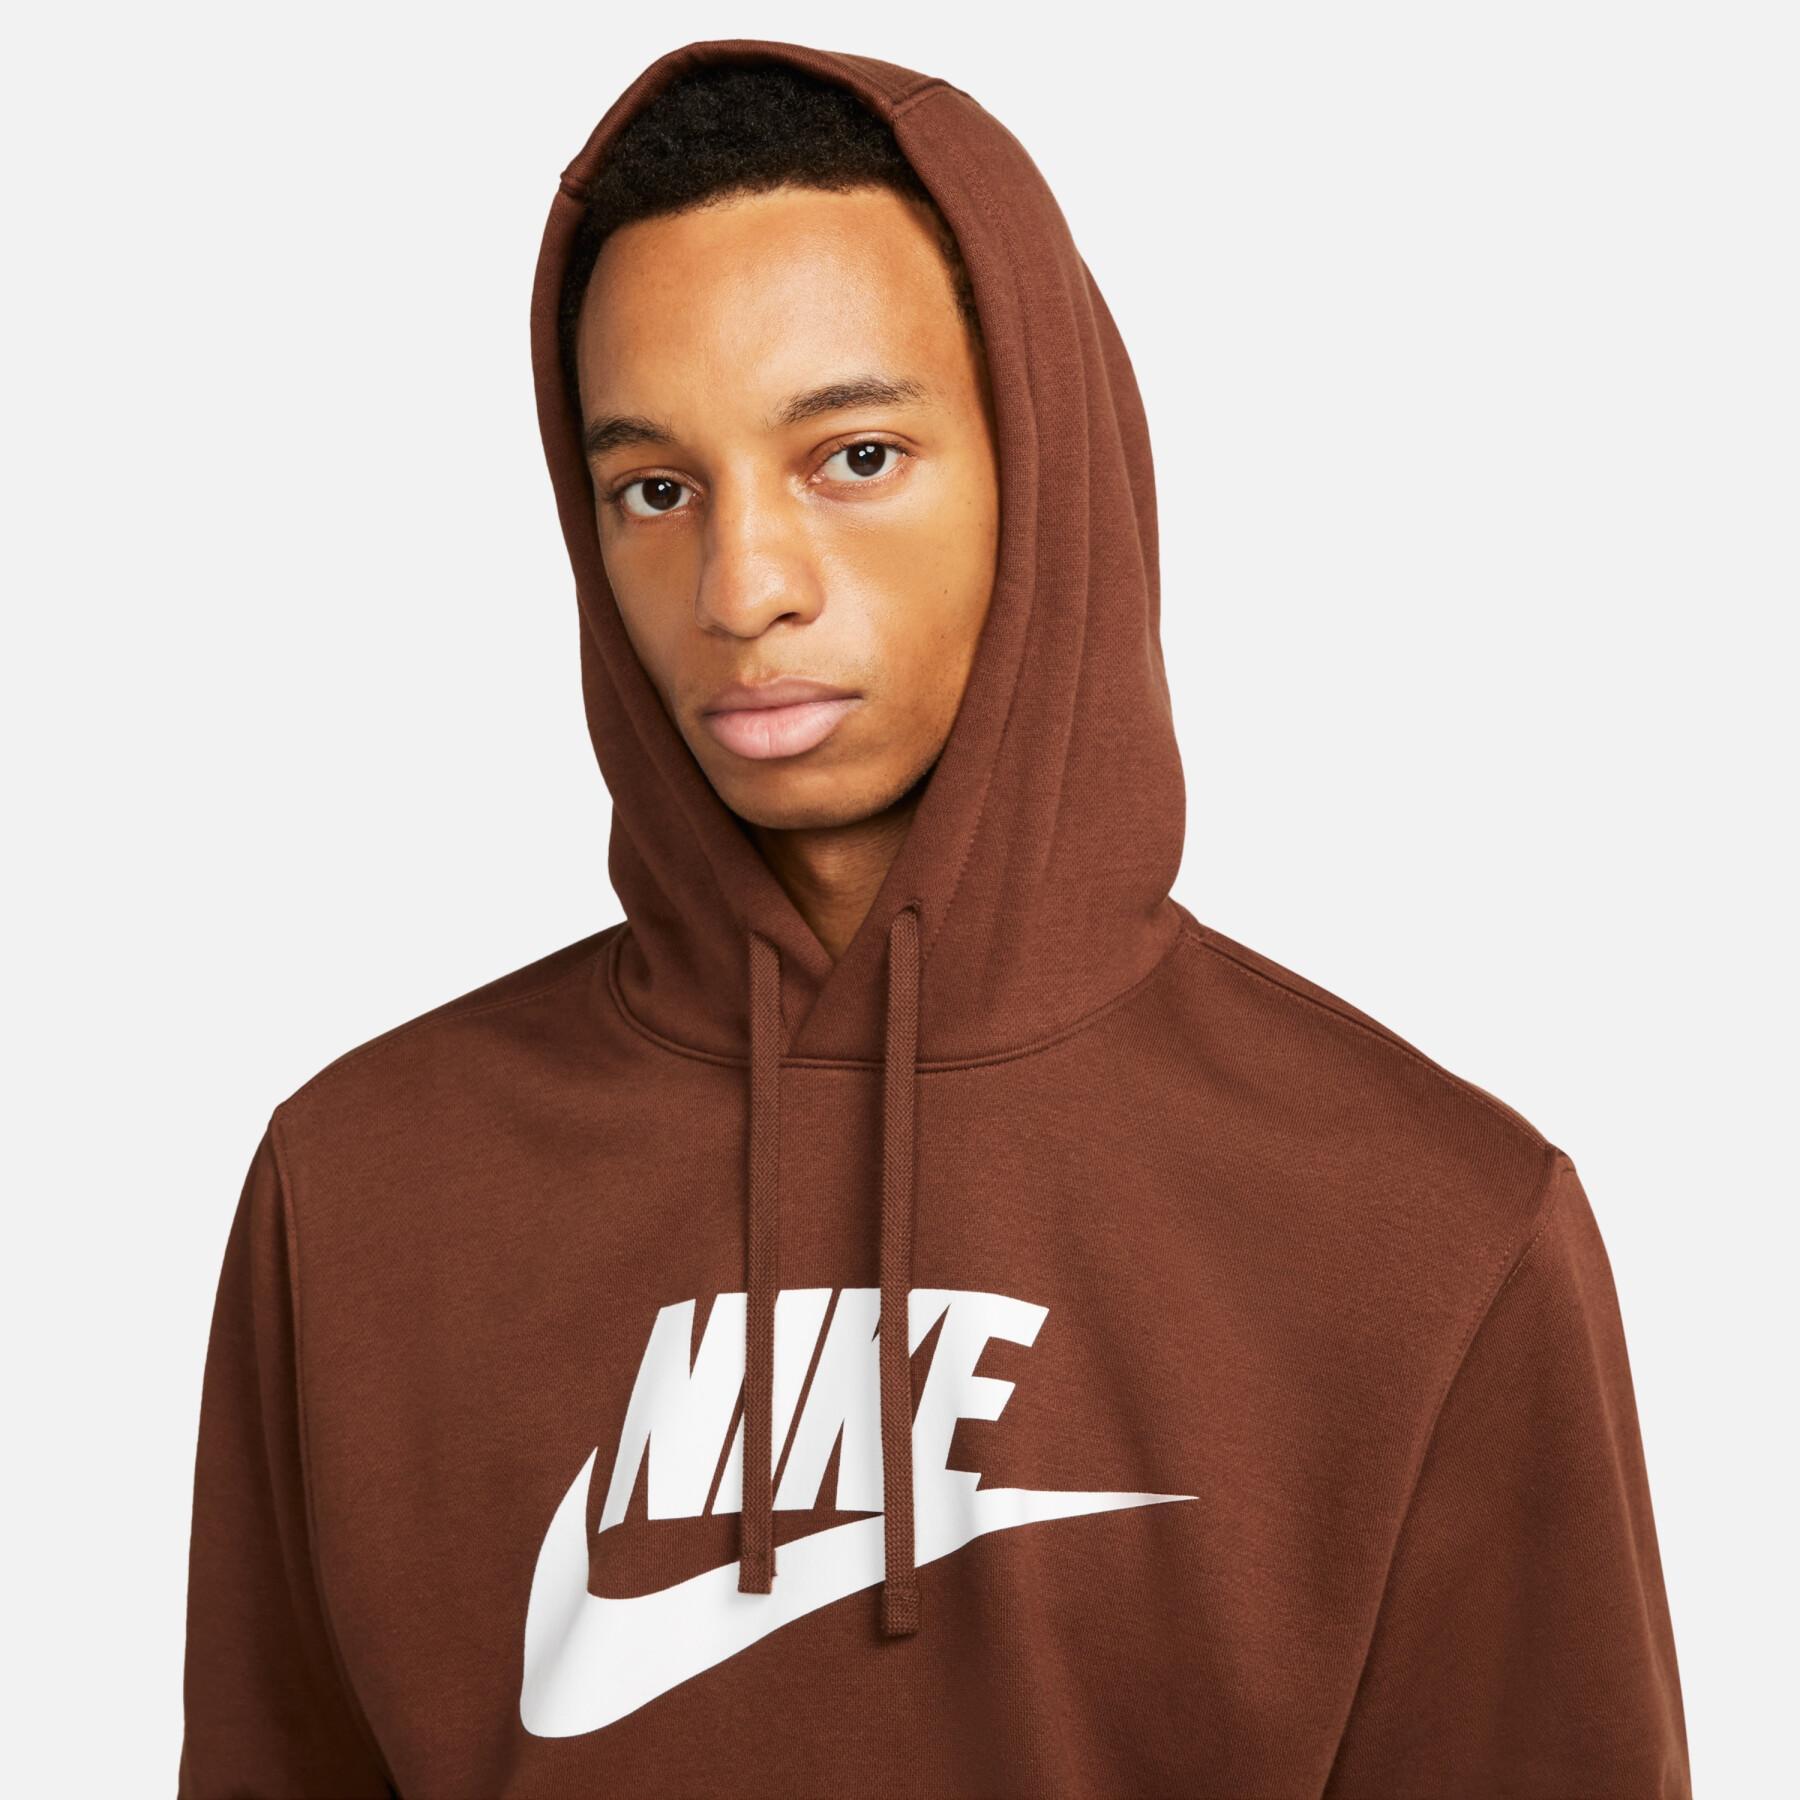 Sweatshirt à capuche maille Nike Sportswear Club